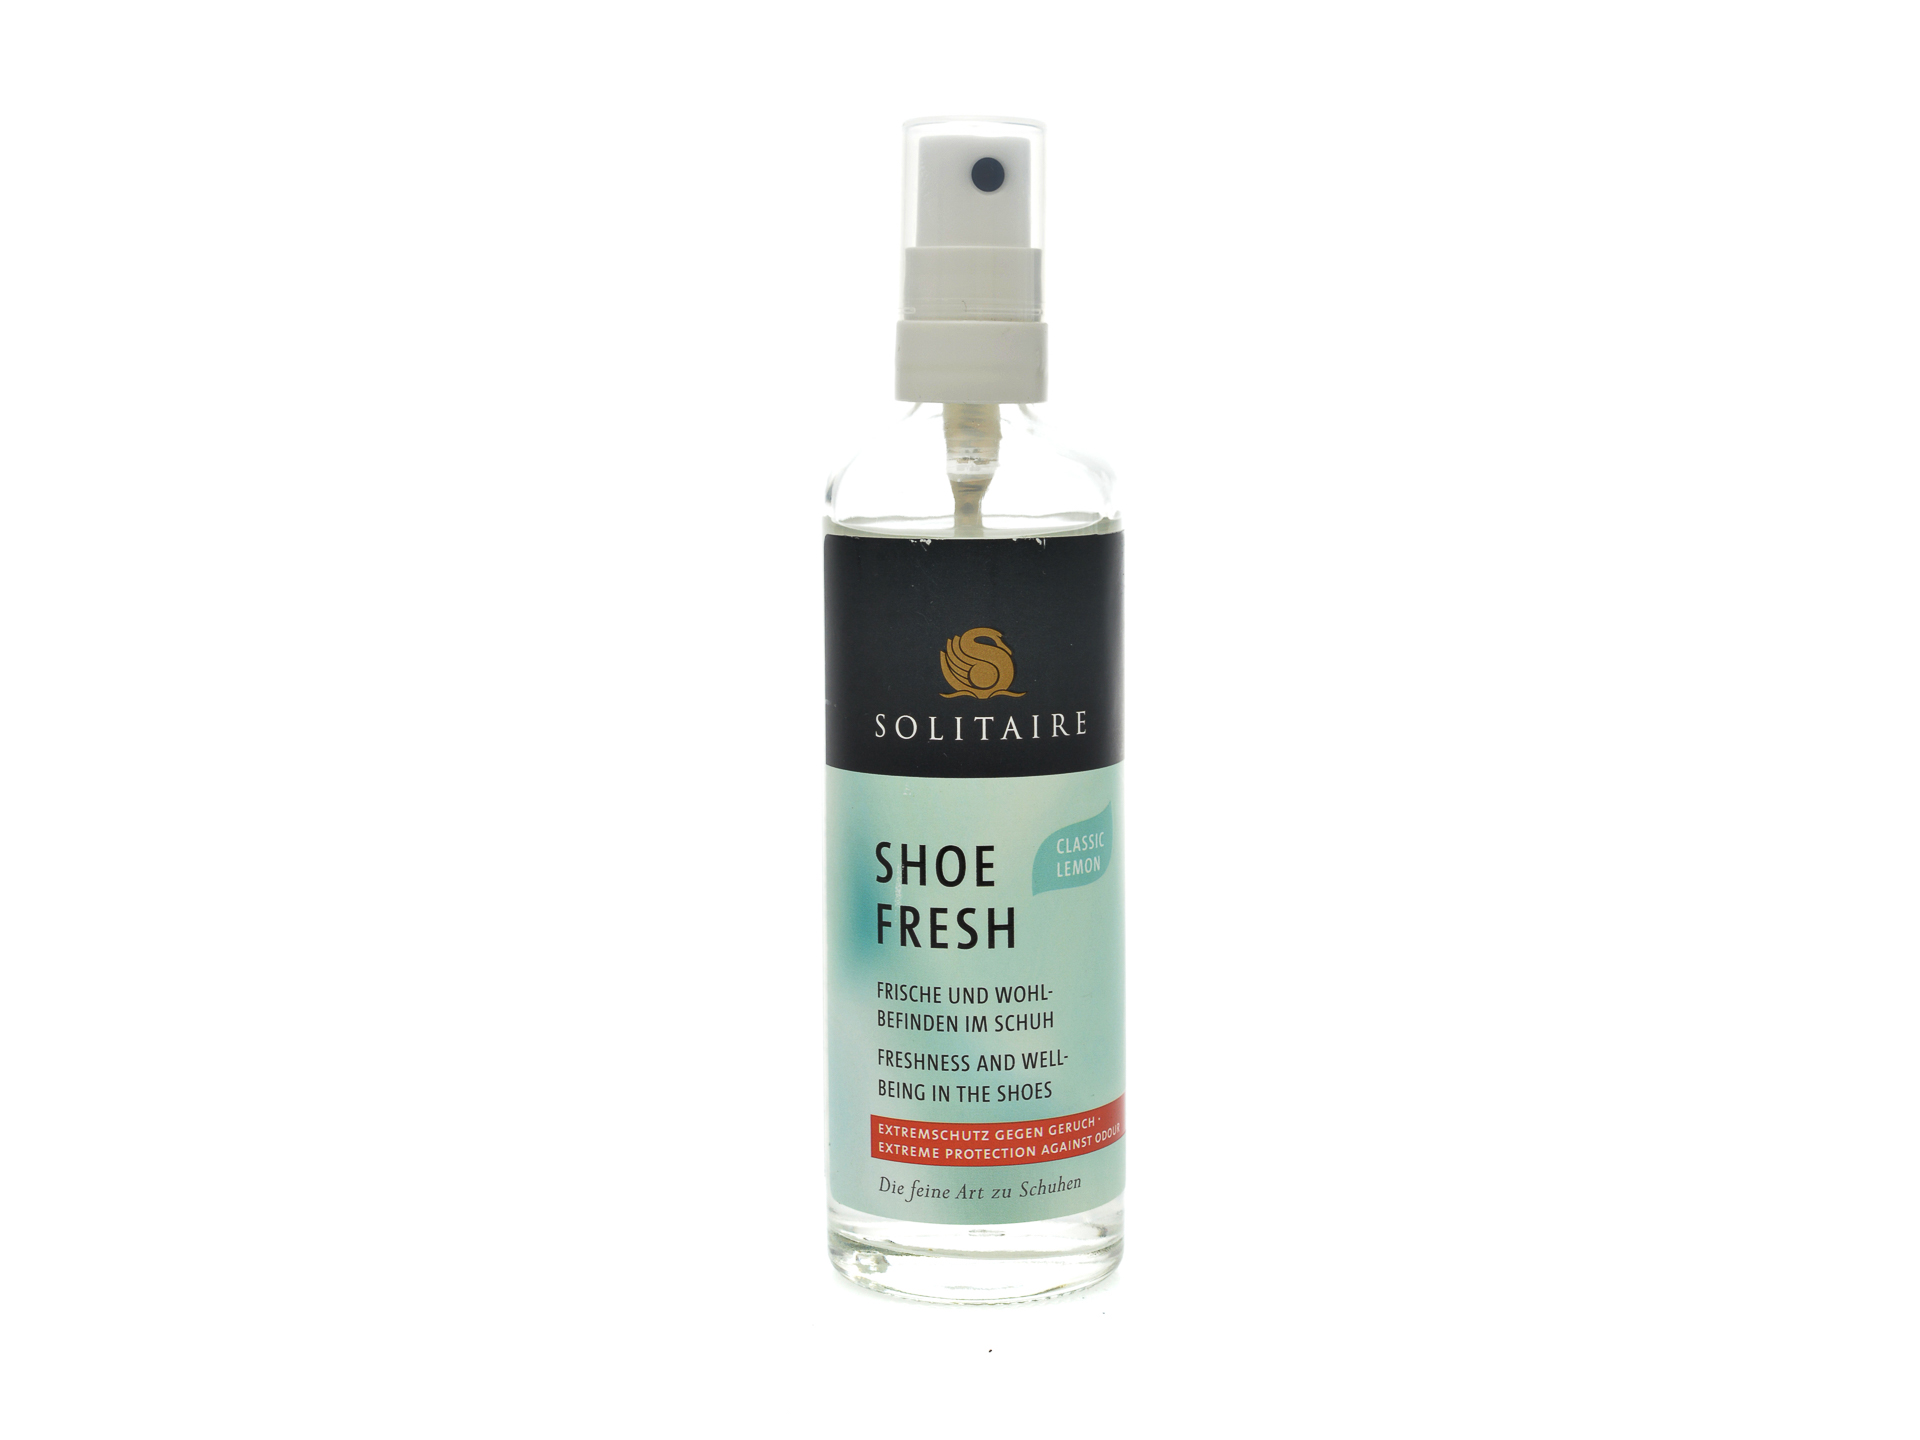 PR Spray pentru mentinerea mirosului placut in incaltaminte, Solitaire image1